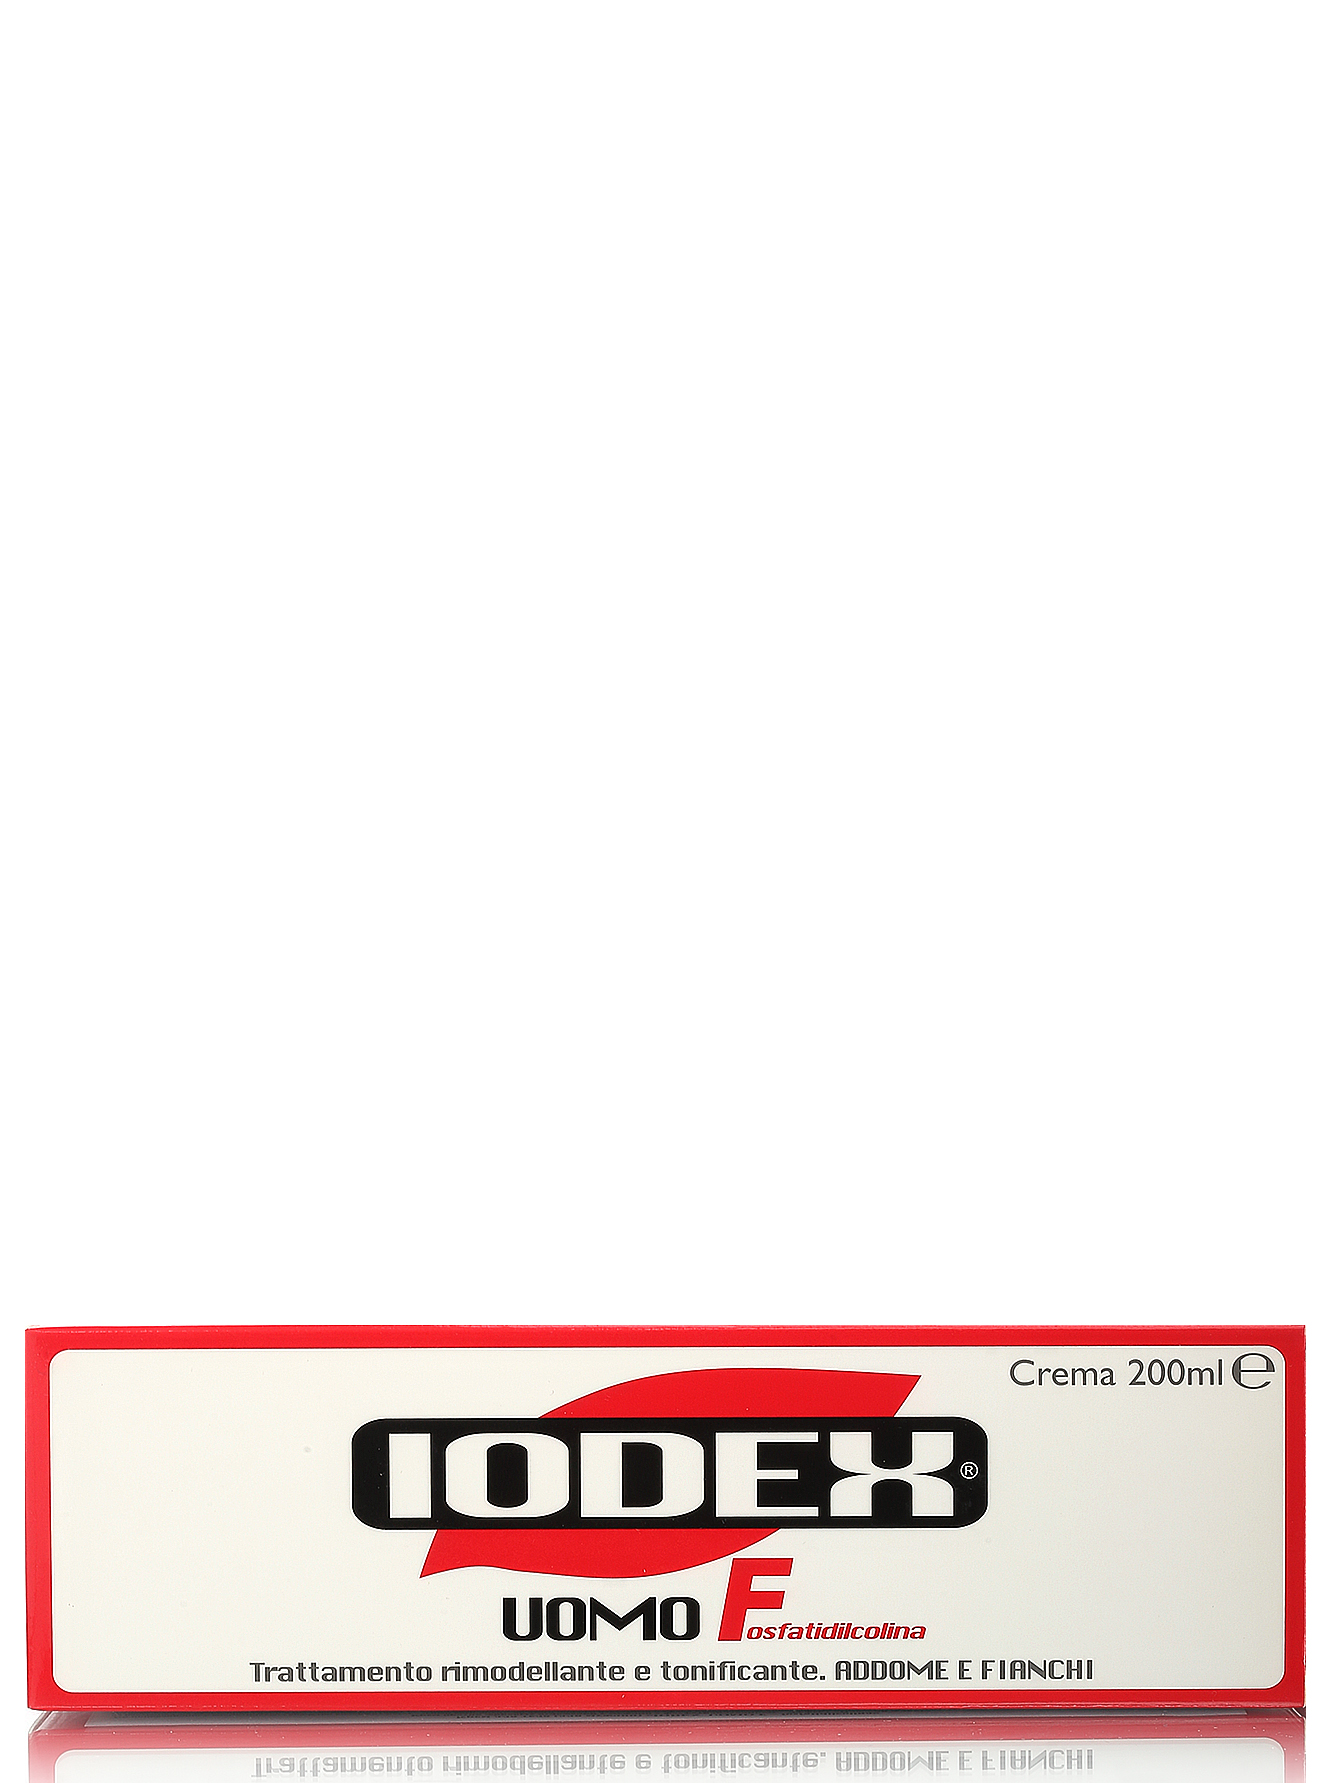  Крем "Iodex Uomo F-Fosfatidilcolina" - Body Care, 200ml - Модель Верх-Низ